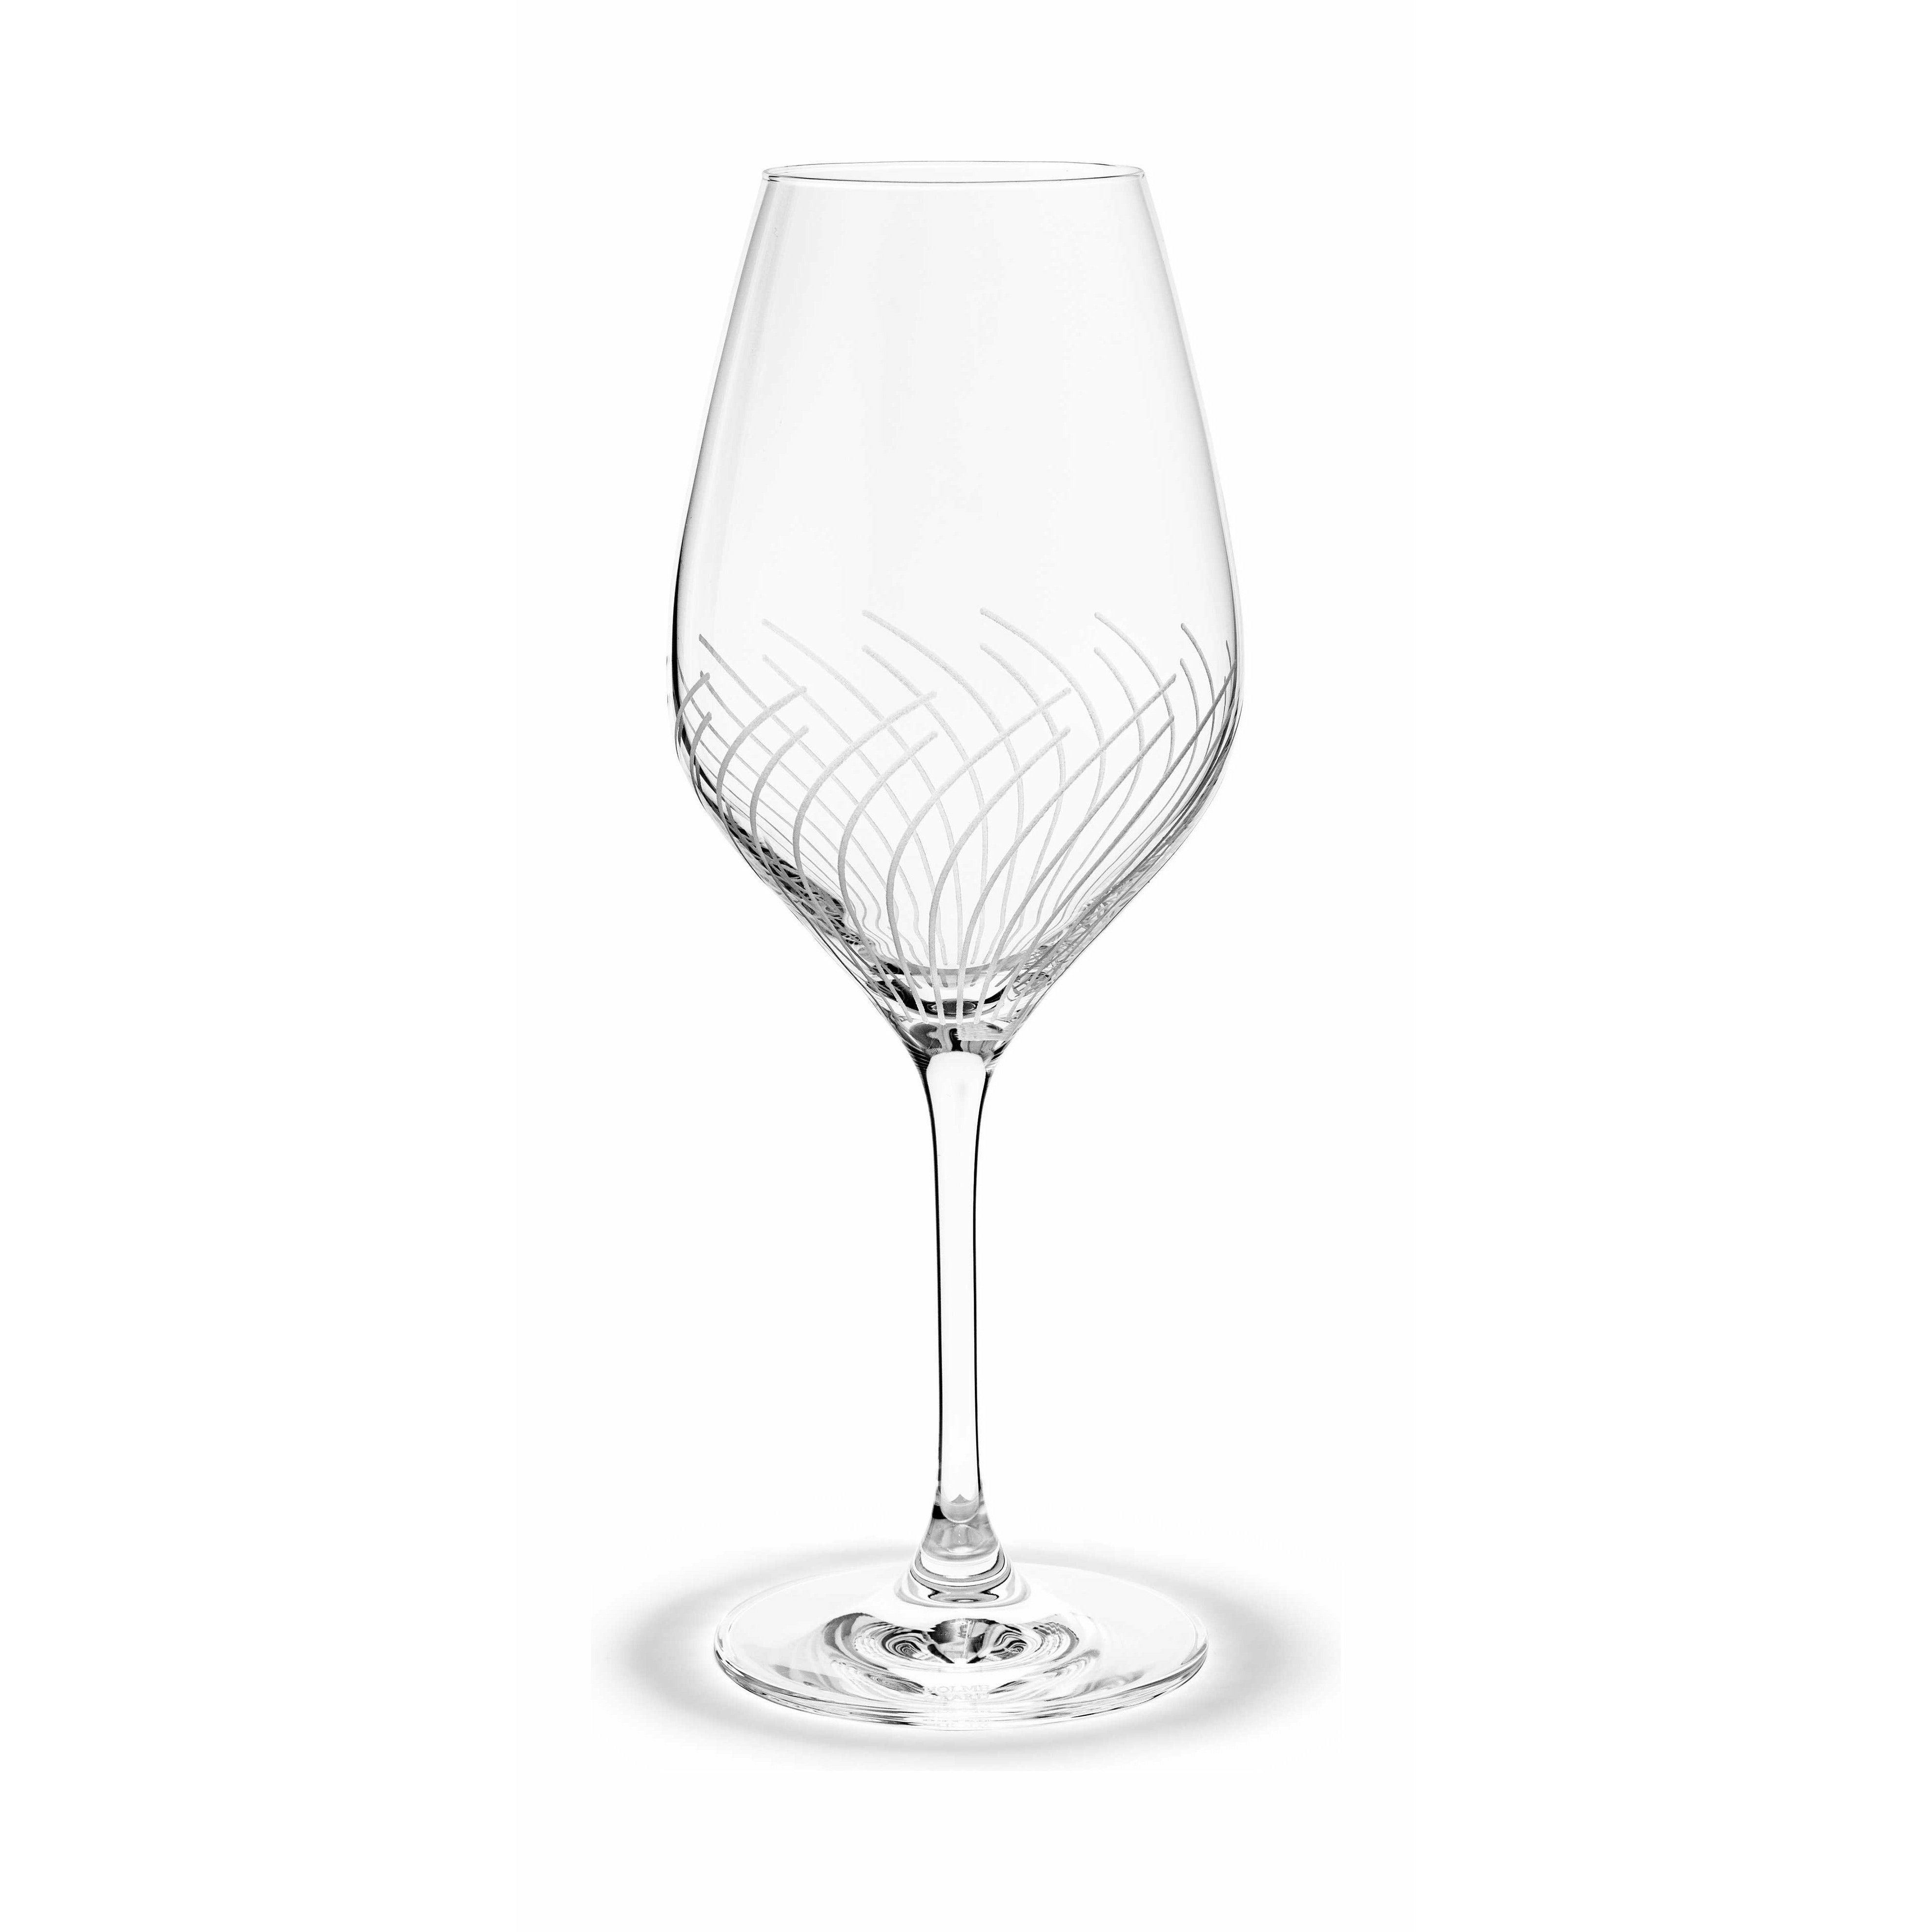 Holmegaard Cabernet -lijnen wit wijnglas, 2 pc's.